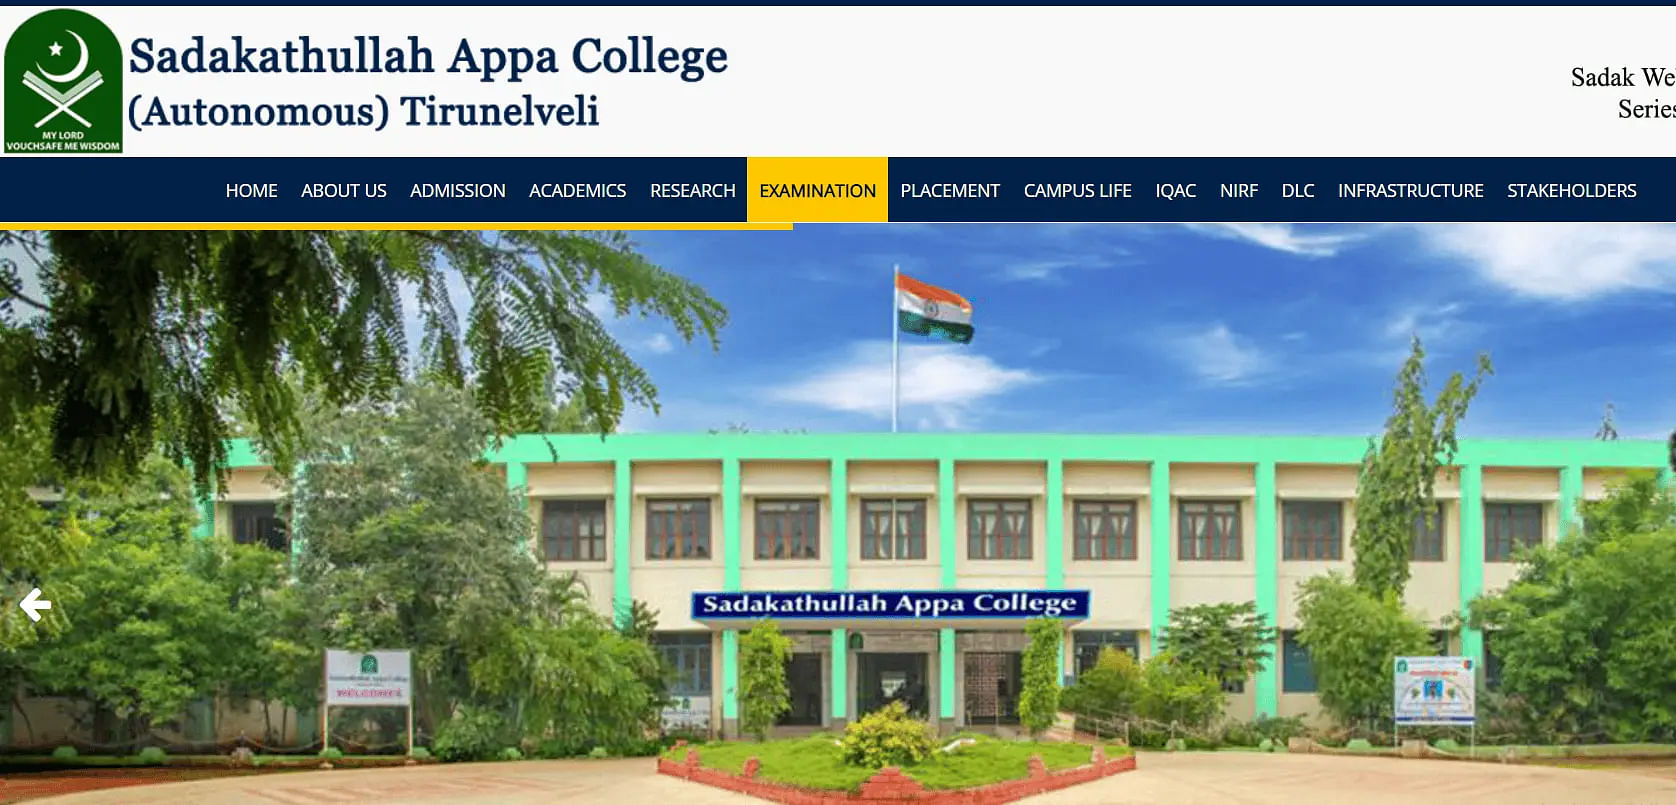 Sadakathullah Appa college